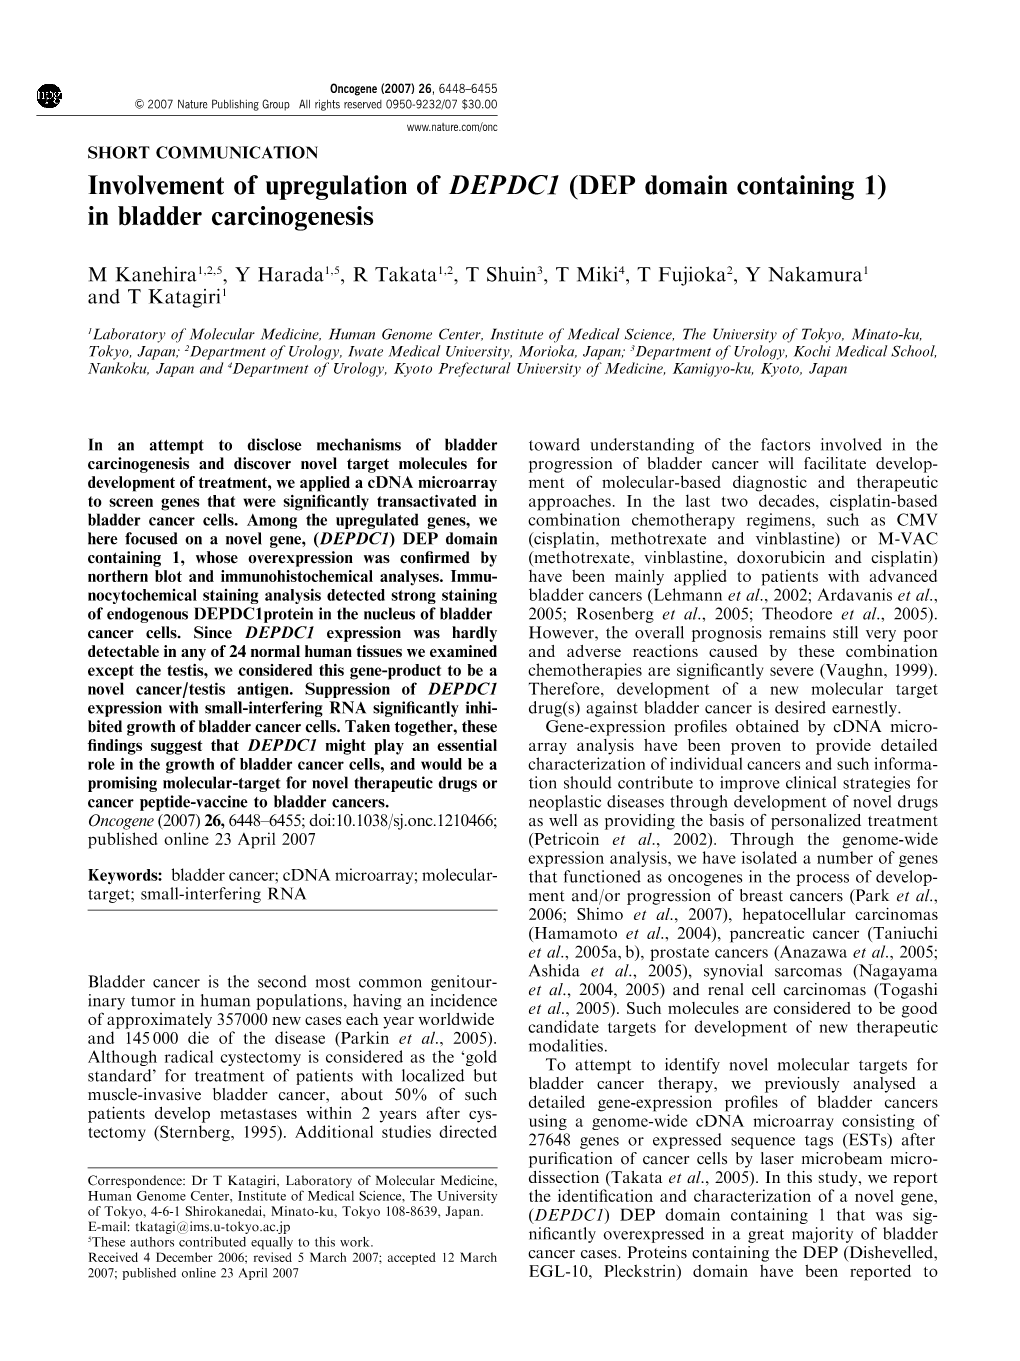 Involvement of Upregulation of DEPDC1 (DEP Domain Containing 1) in Bladder Carcinogenesis